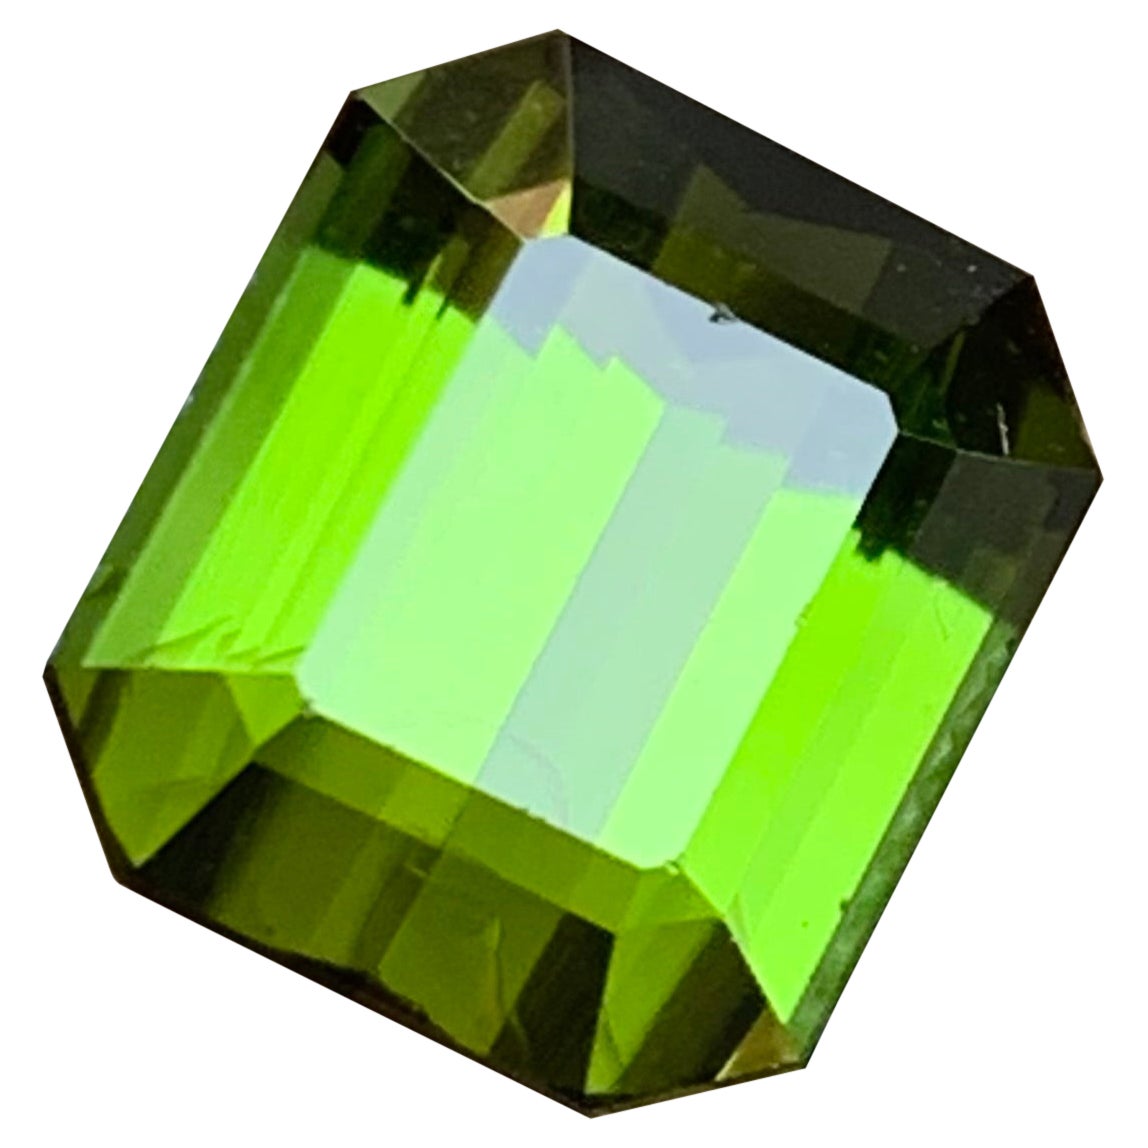 Rare tourmaline naturelle verte taille émeraude/octobre, 6,25 carats afghane